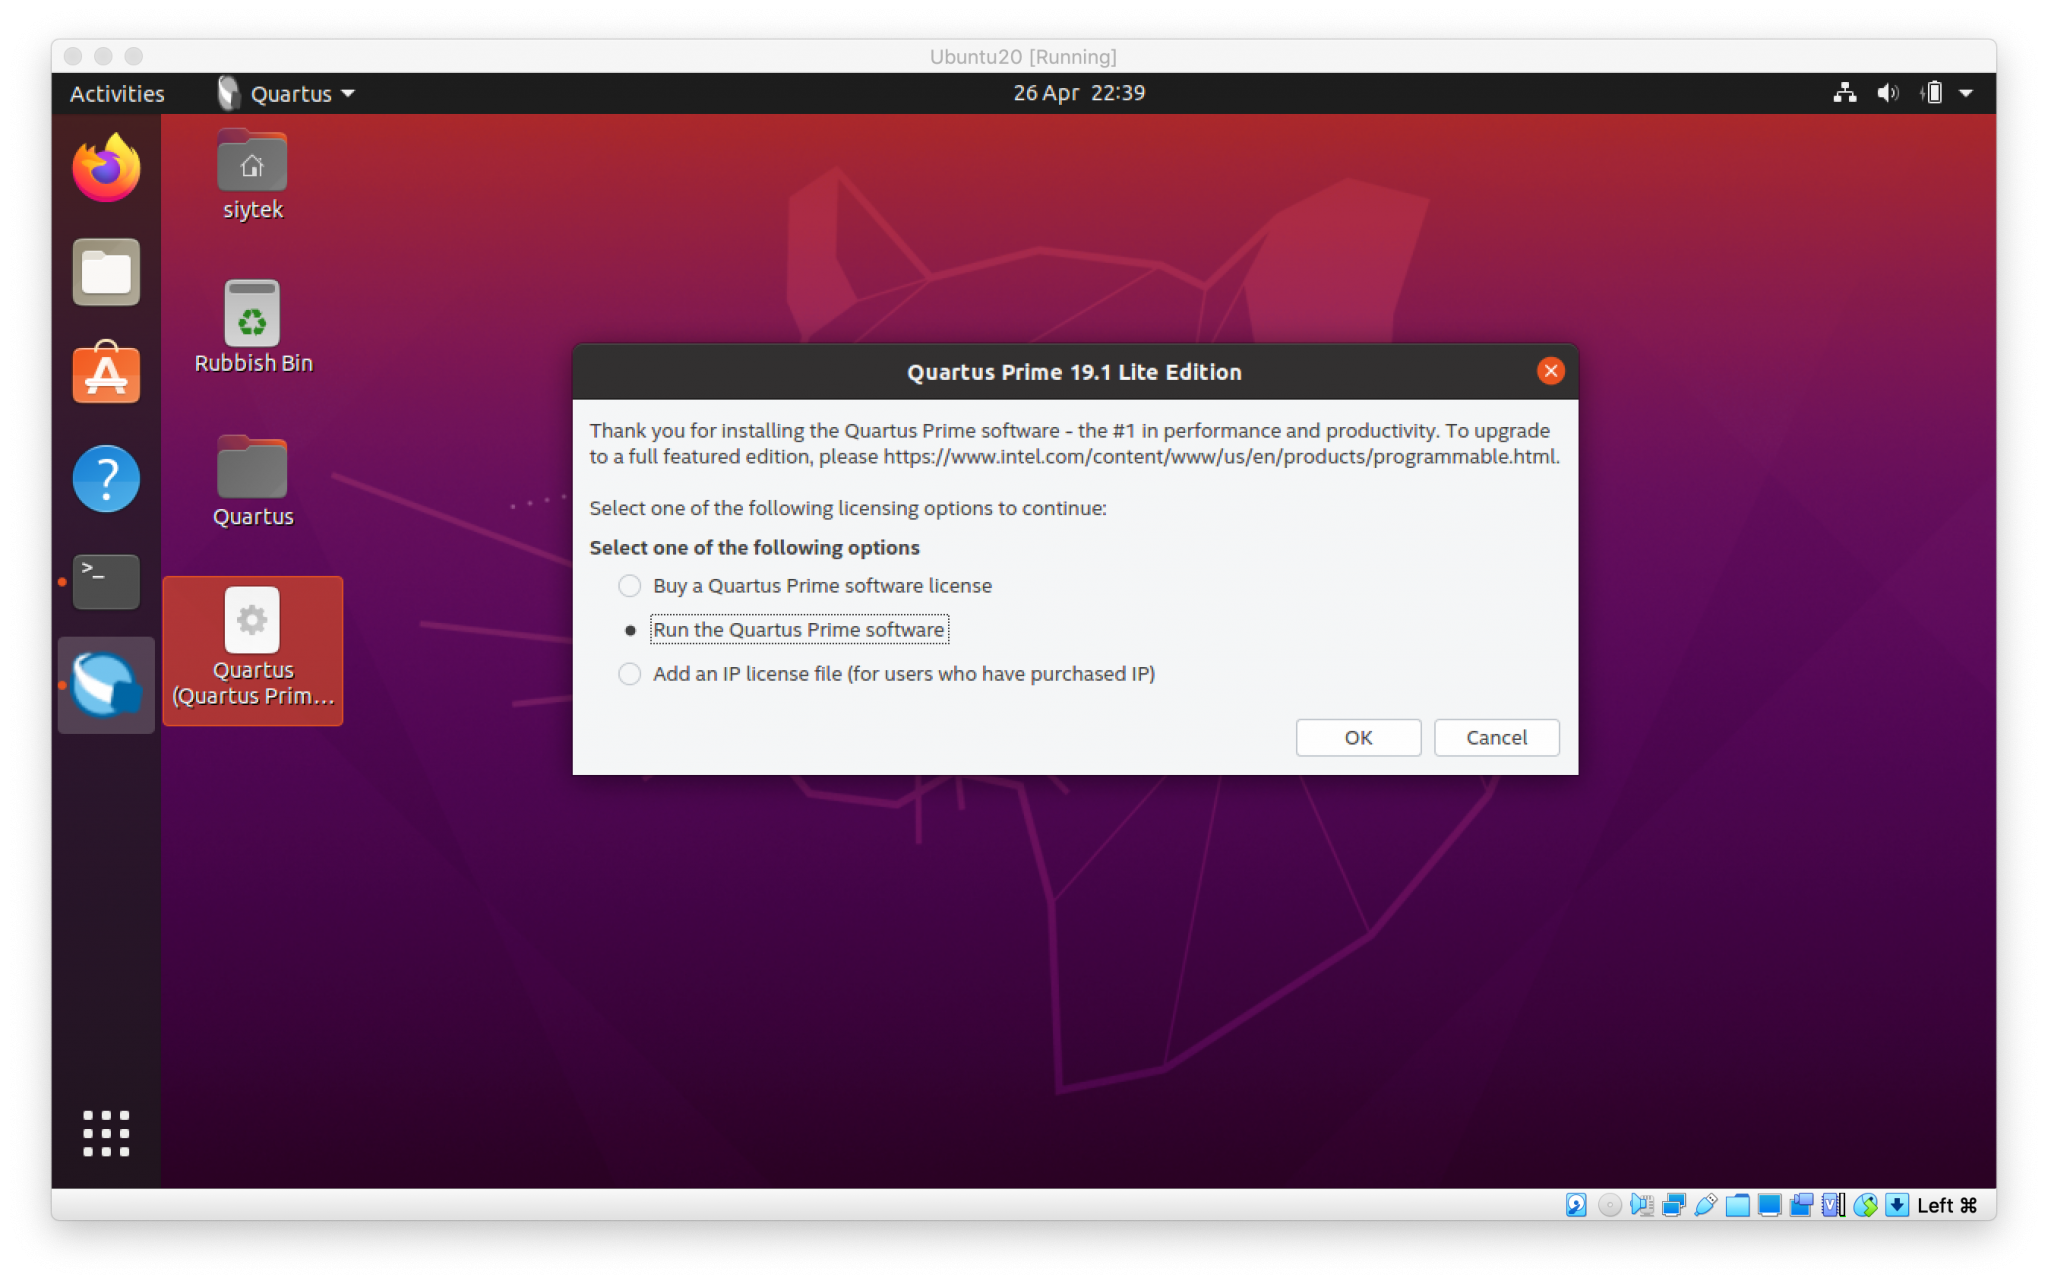 virtualbox internet settings on ubuntu for mac os